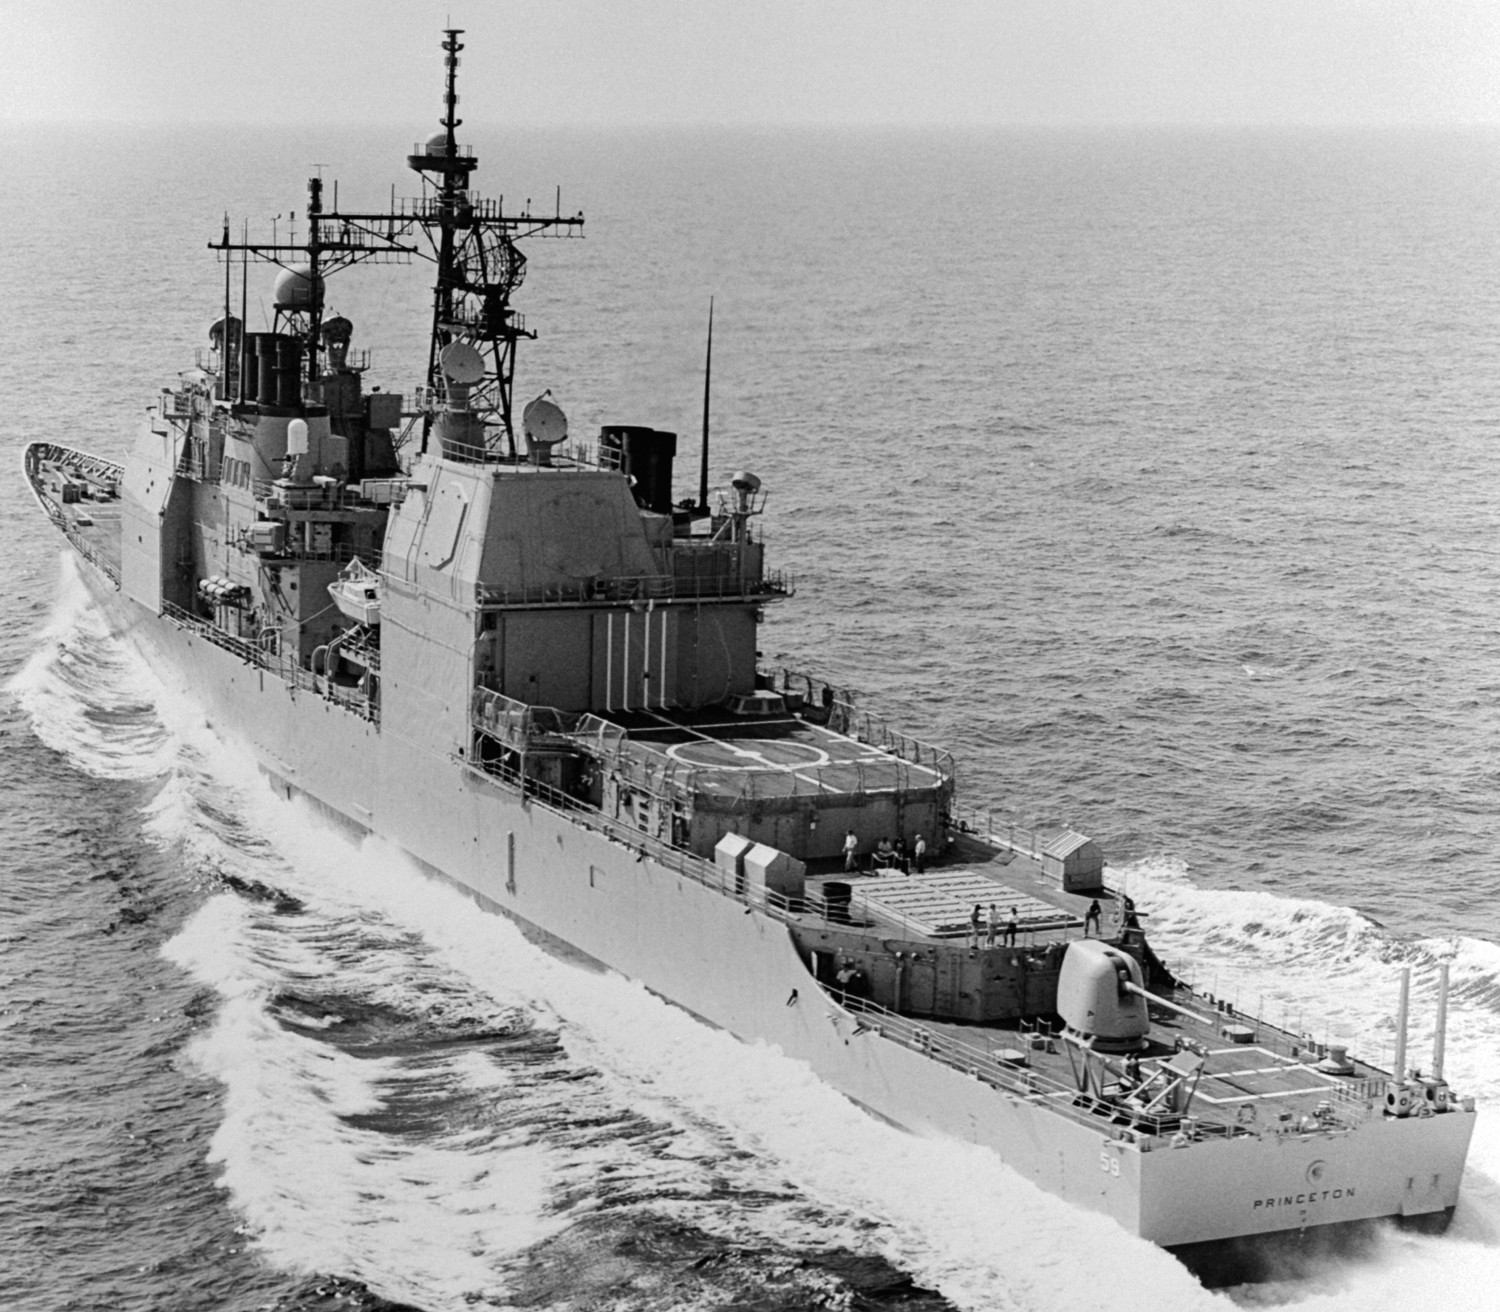 cg-59 uss princeton ticonderoga class guided missile cruiser aegis us navy 120